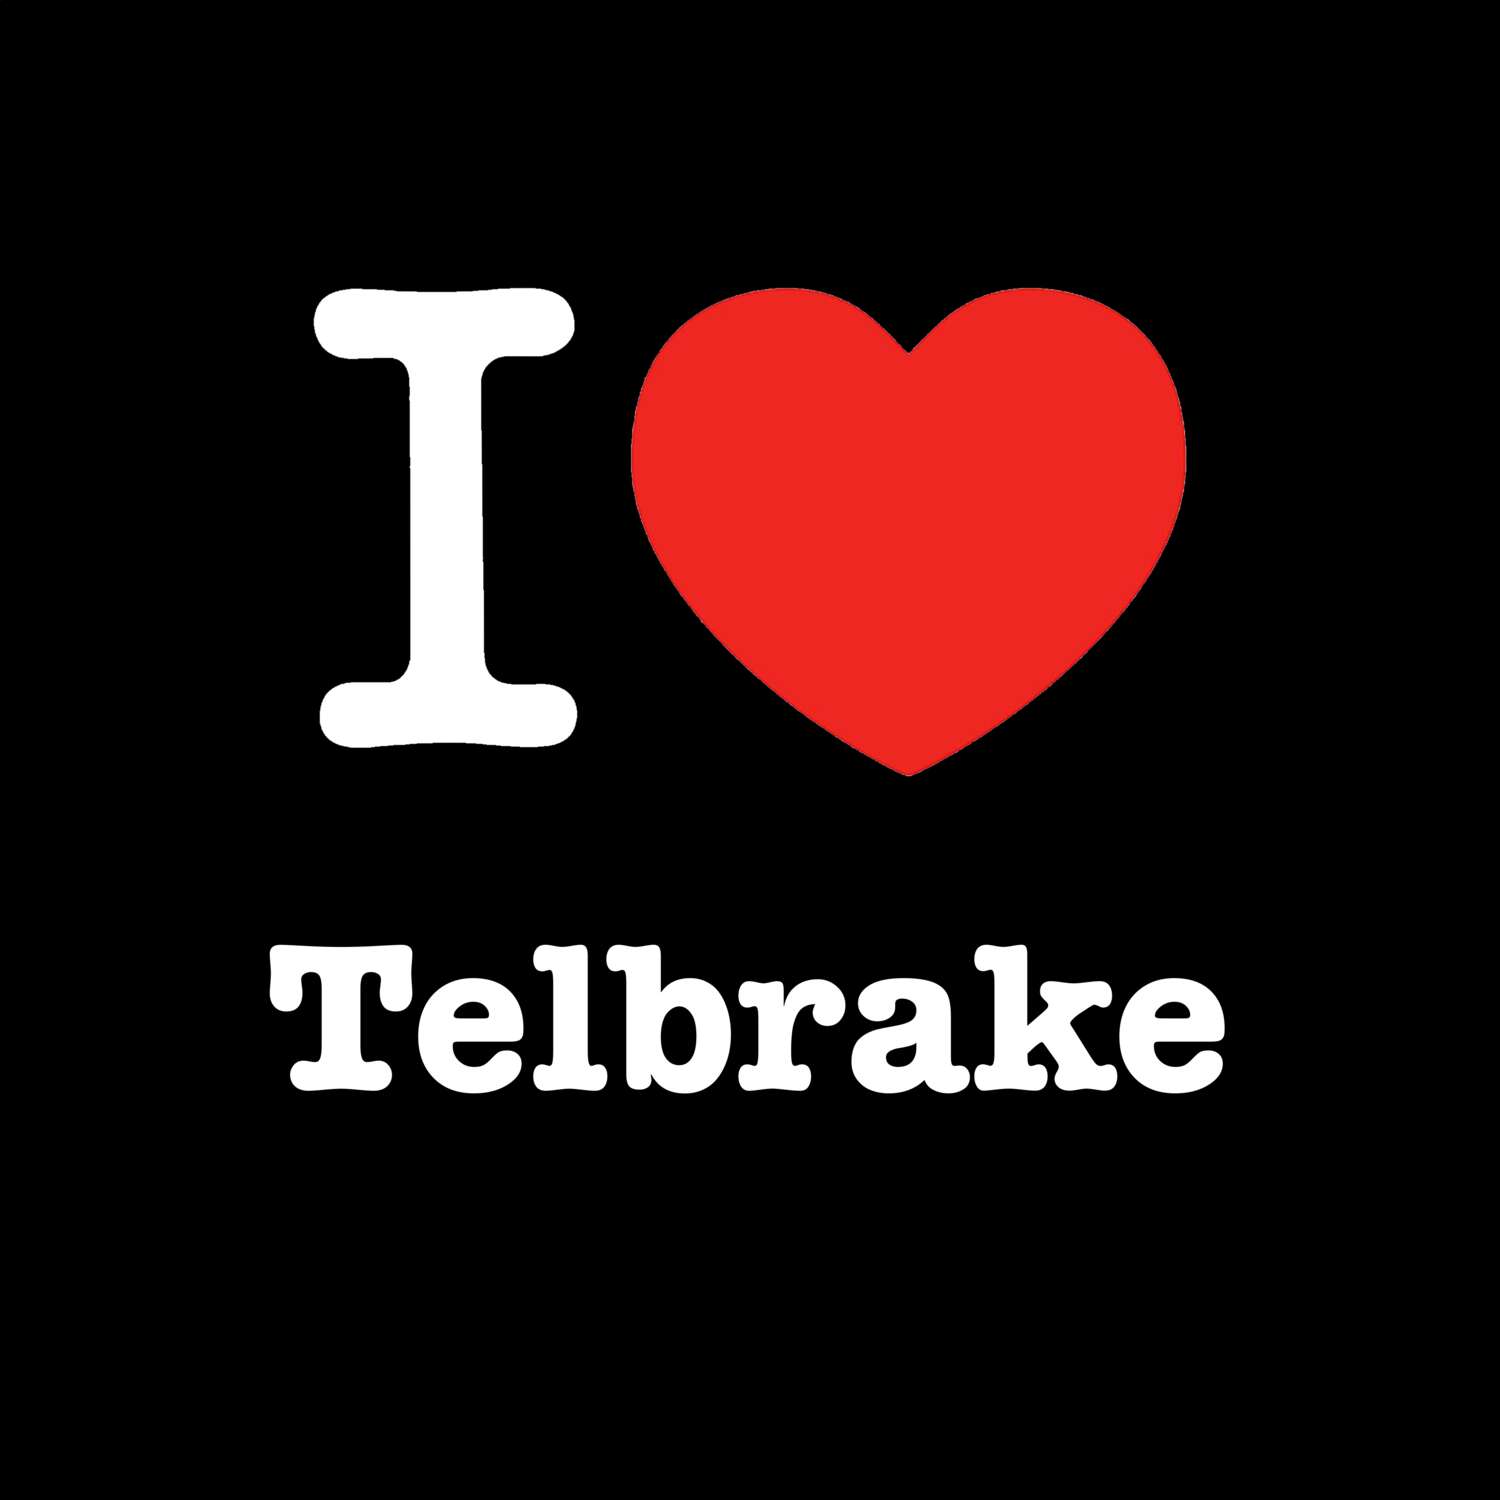 Telbrake T-Shirt »I love«